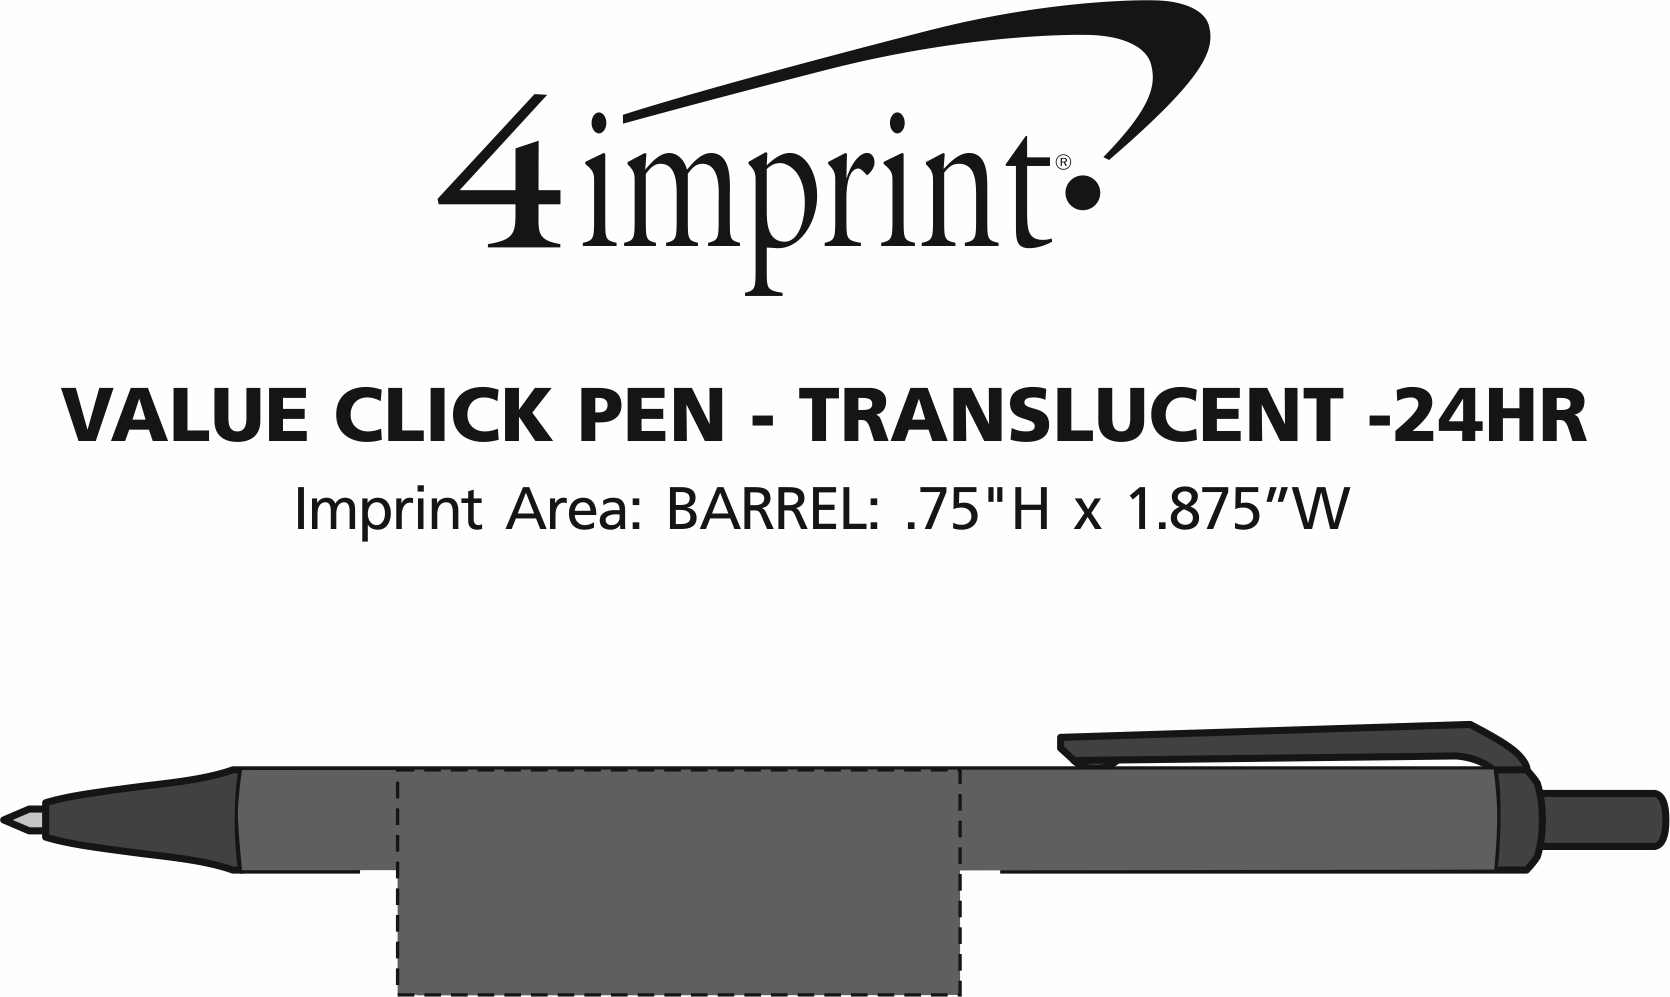 Imprint Area of Value Click Pen - Translucent - 24 hr